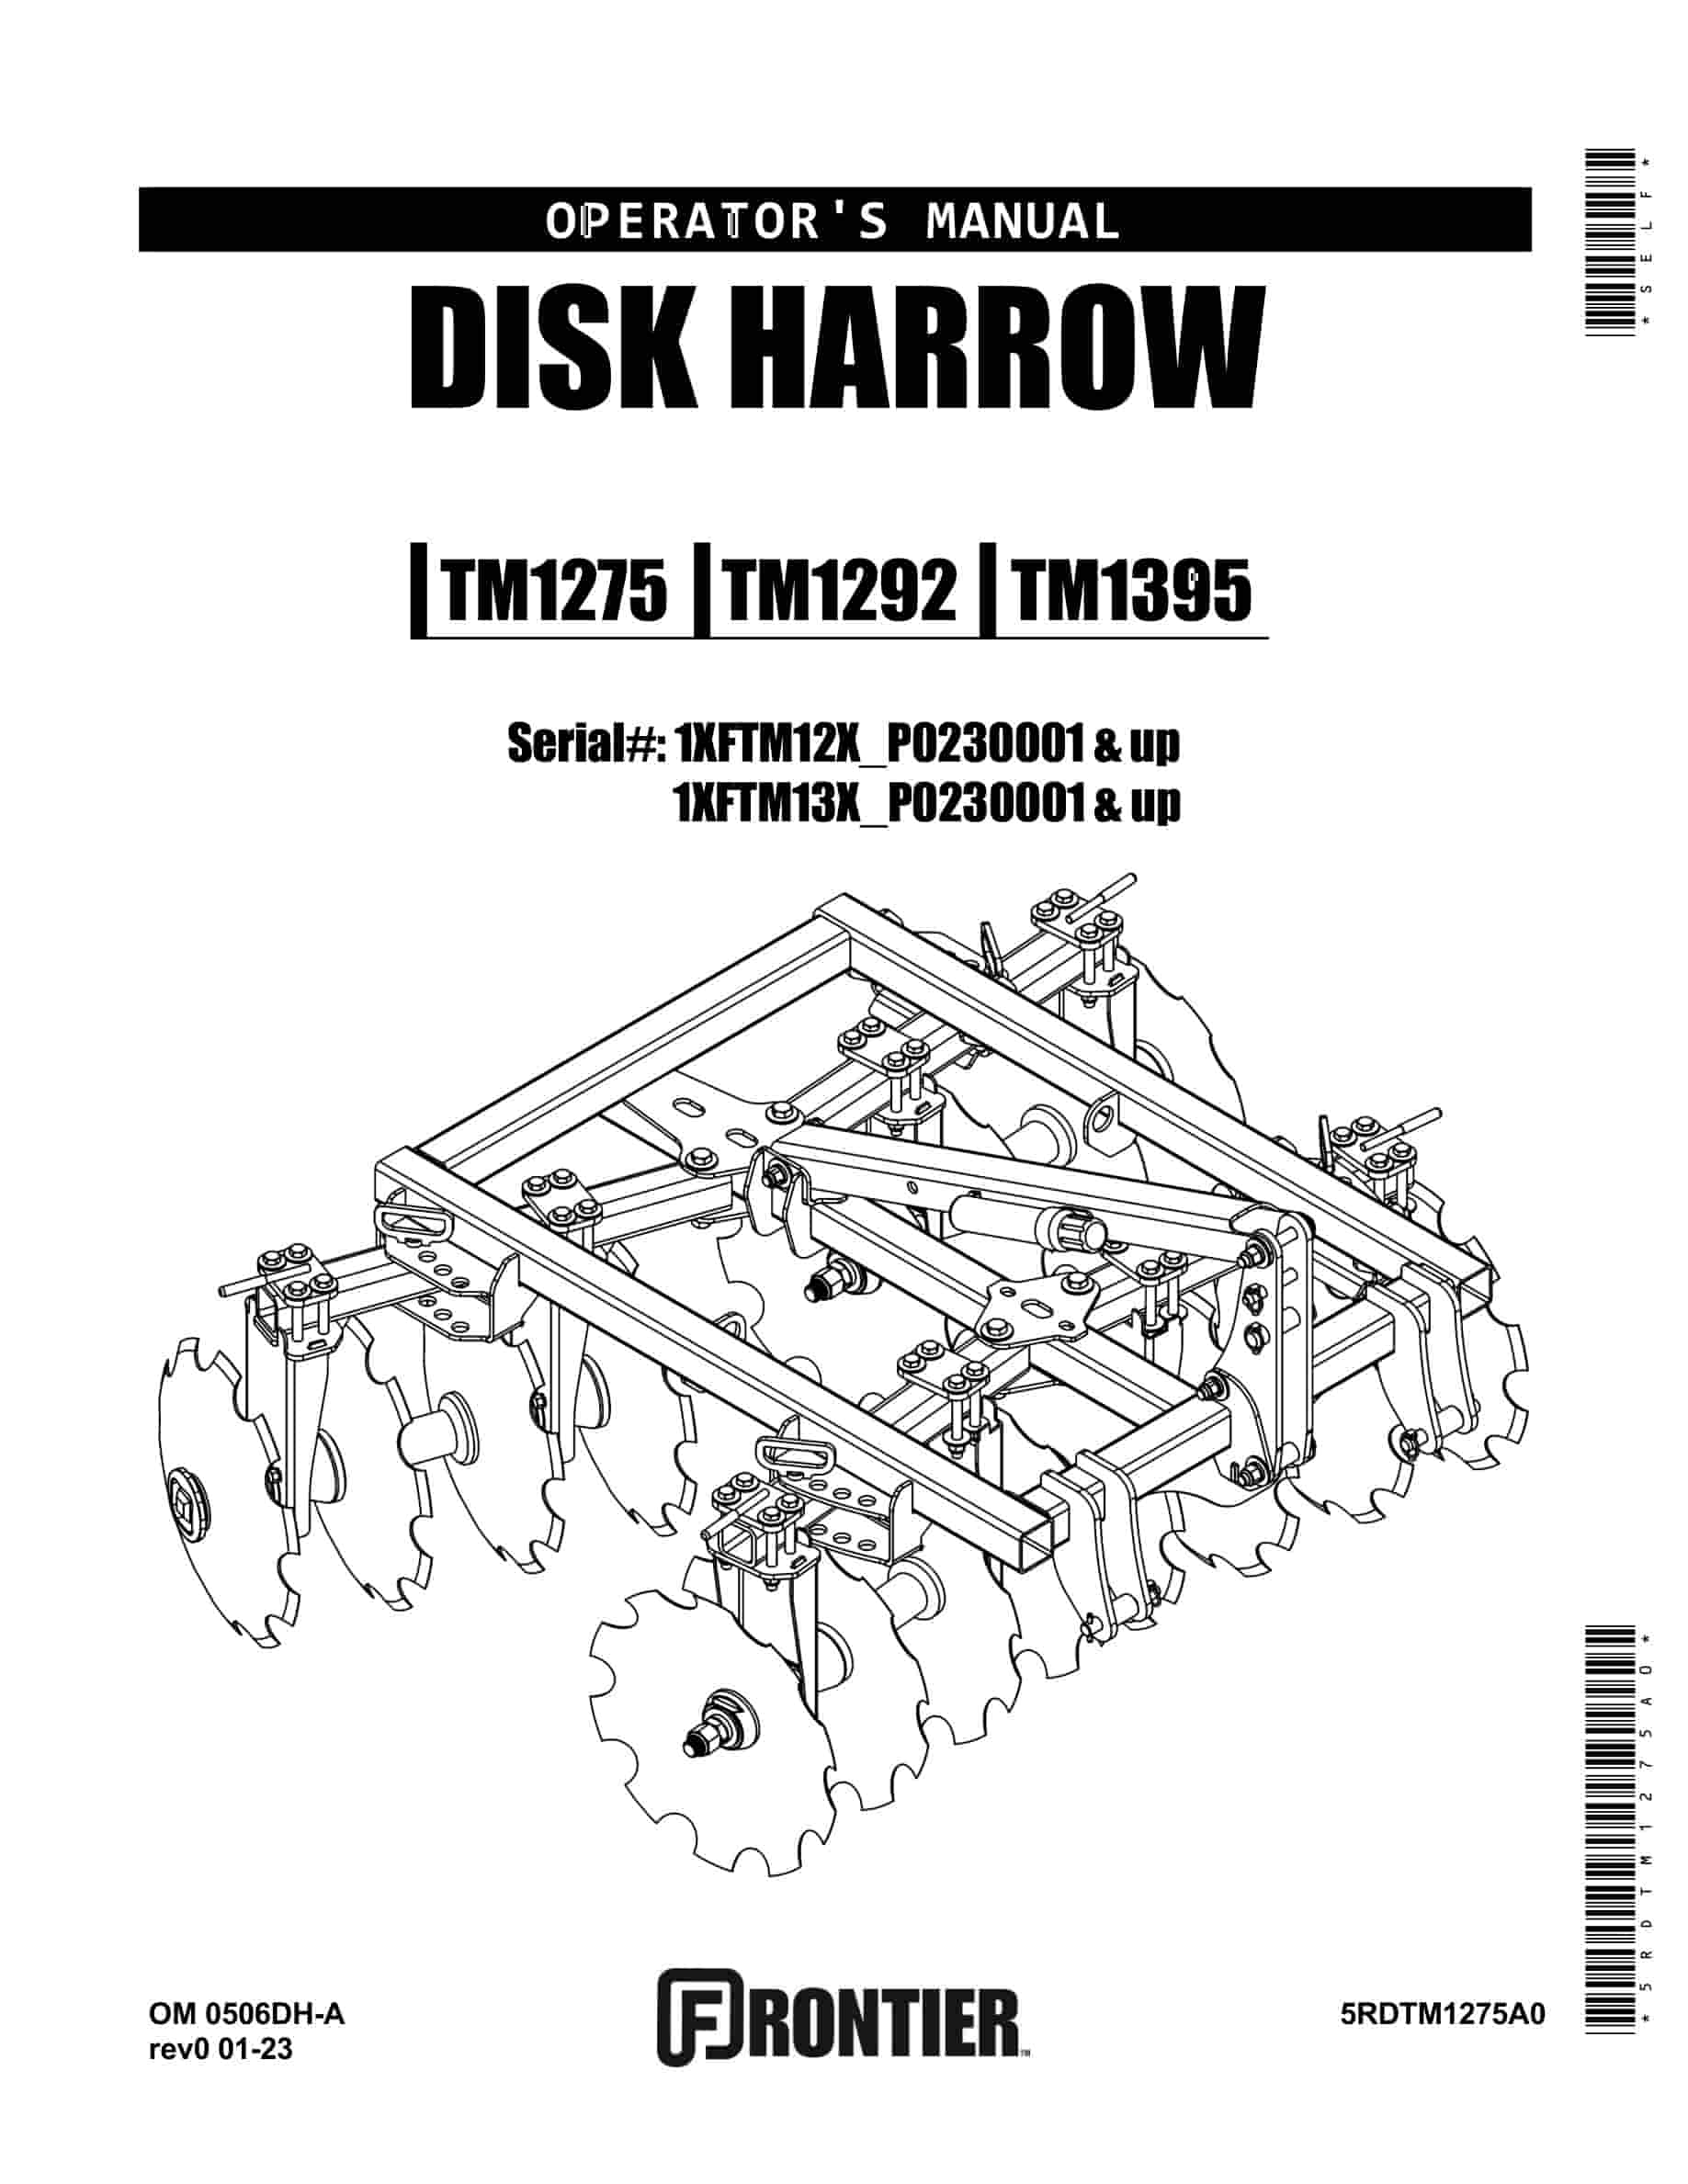 John Deere TM1275 TM1292 TM1395 DISK HARROW Operator Manual 5RDTM1275A0-1